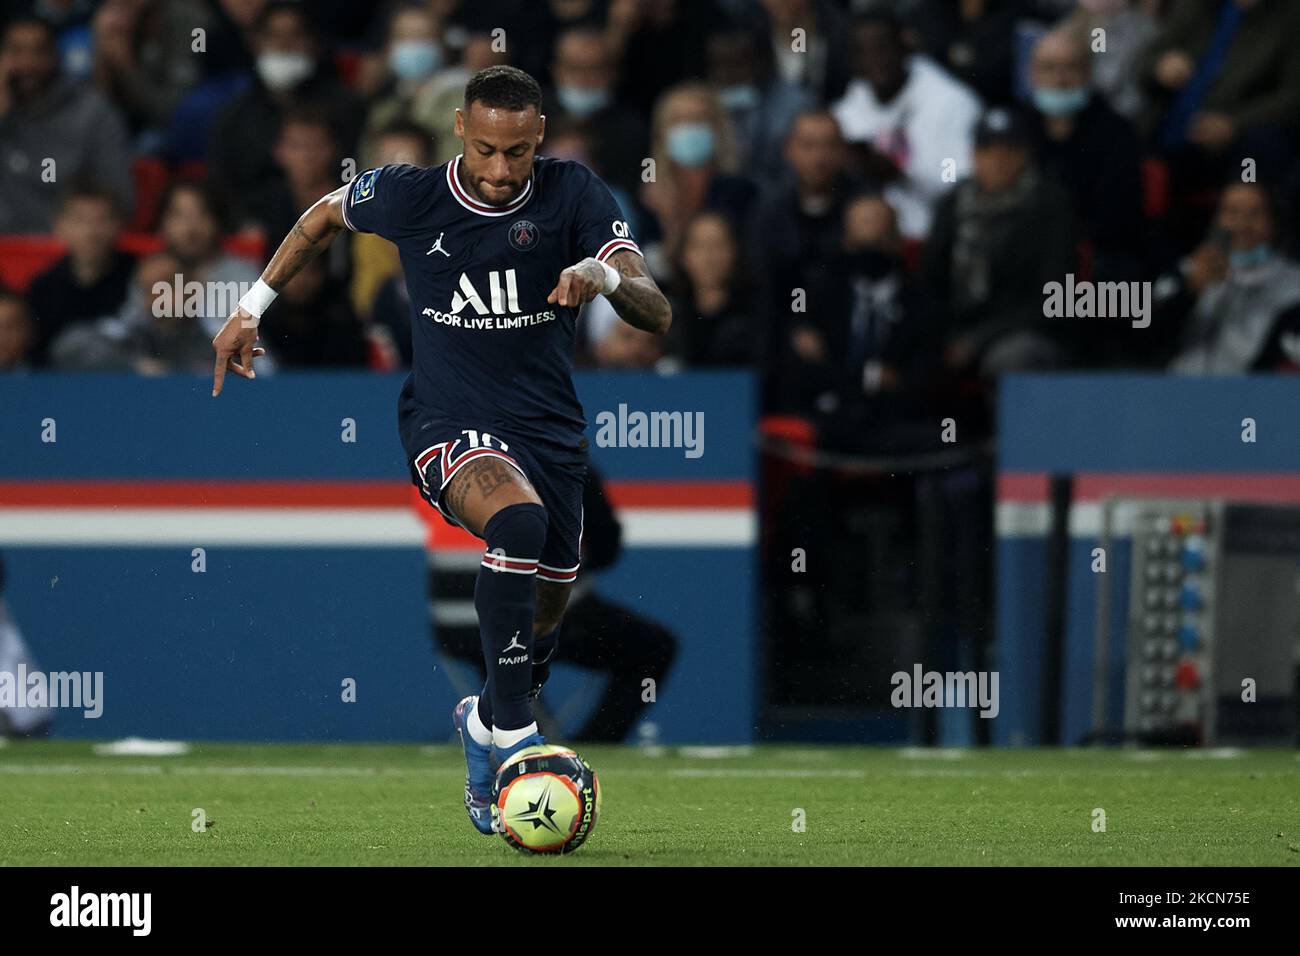 Neymar di PSG controlla la palla durante la partita Ligue 1 Uber mangia tra Parigi Saint Germain e Lione al Parc des Princes il 19 settembre 2021 a Parigi, Francia. (Foto di Jose Breton/Pics Action/NurPhoto) Foto Stock